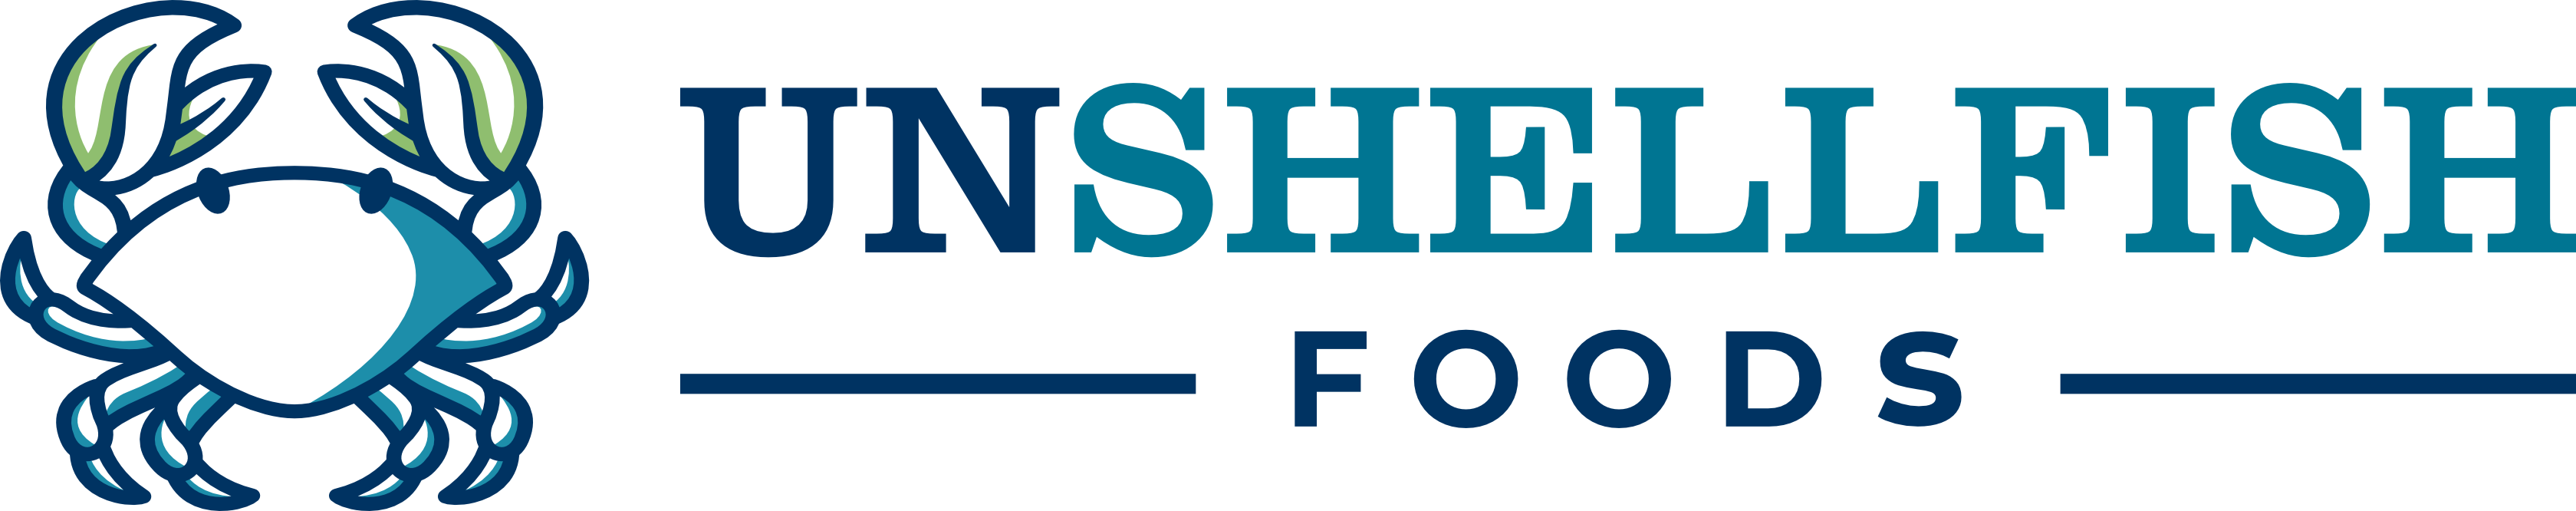 Unshellfish Foods